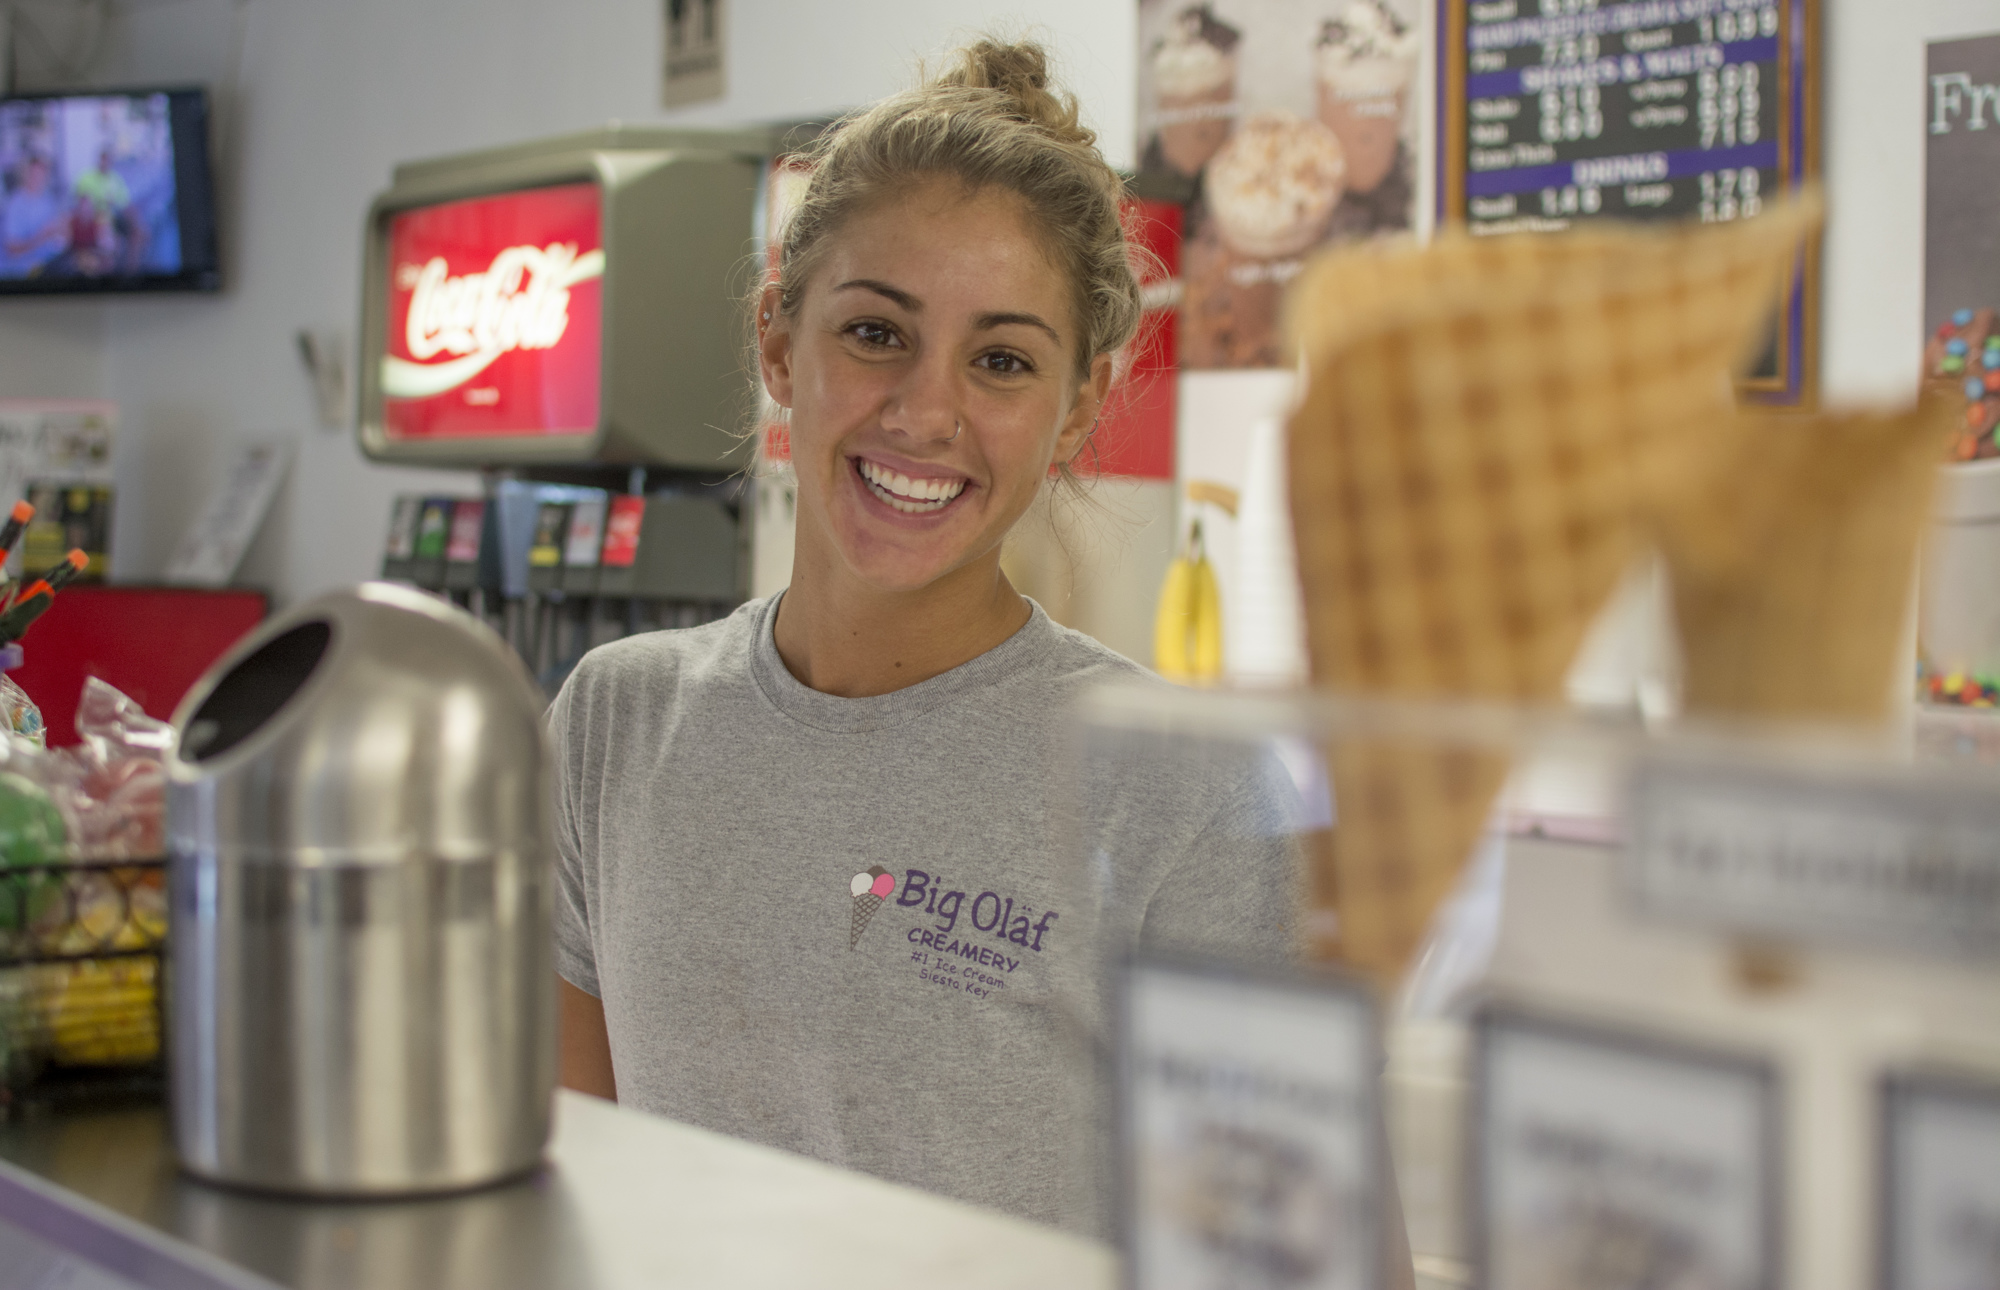 Melody Mullet, 21, helps prepare Big Olaf Creamery in the Siesta Key Village before Hurricane Irma hits.